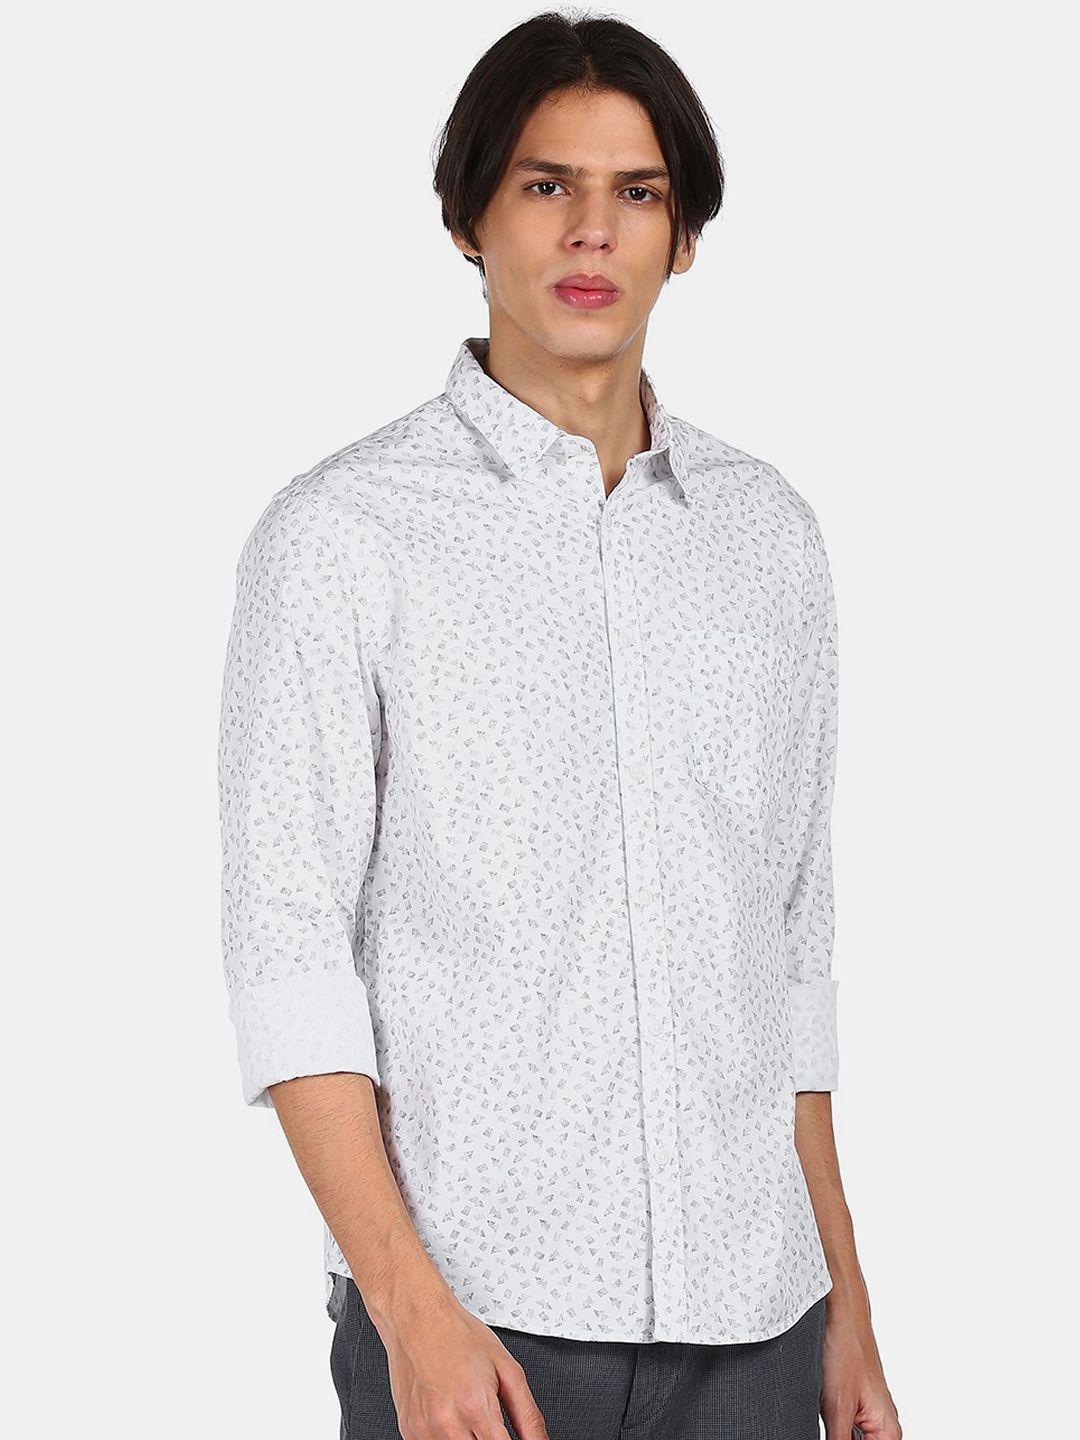 ruggers-men-white-&-grey-printed-cotton-casual-shirt